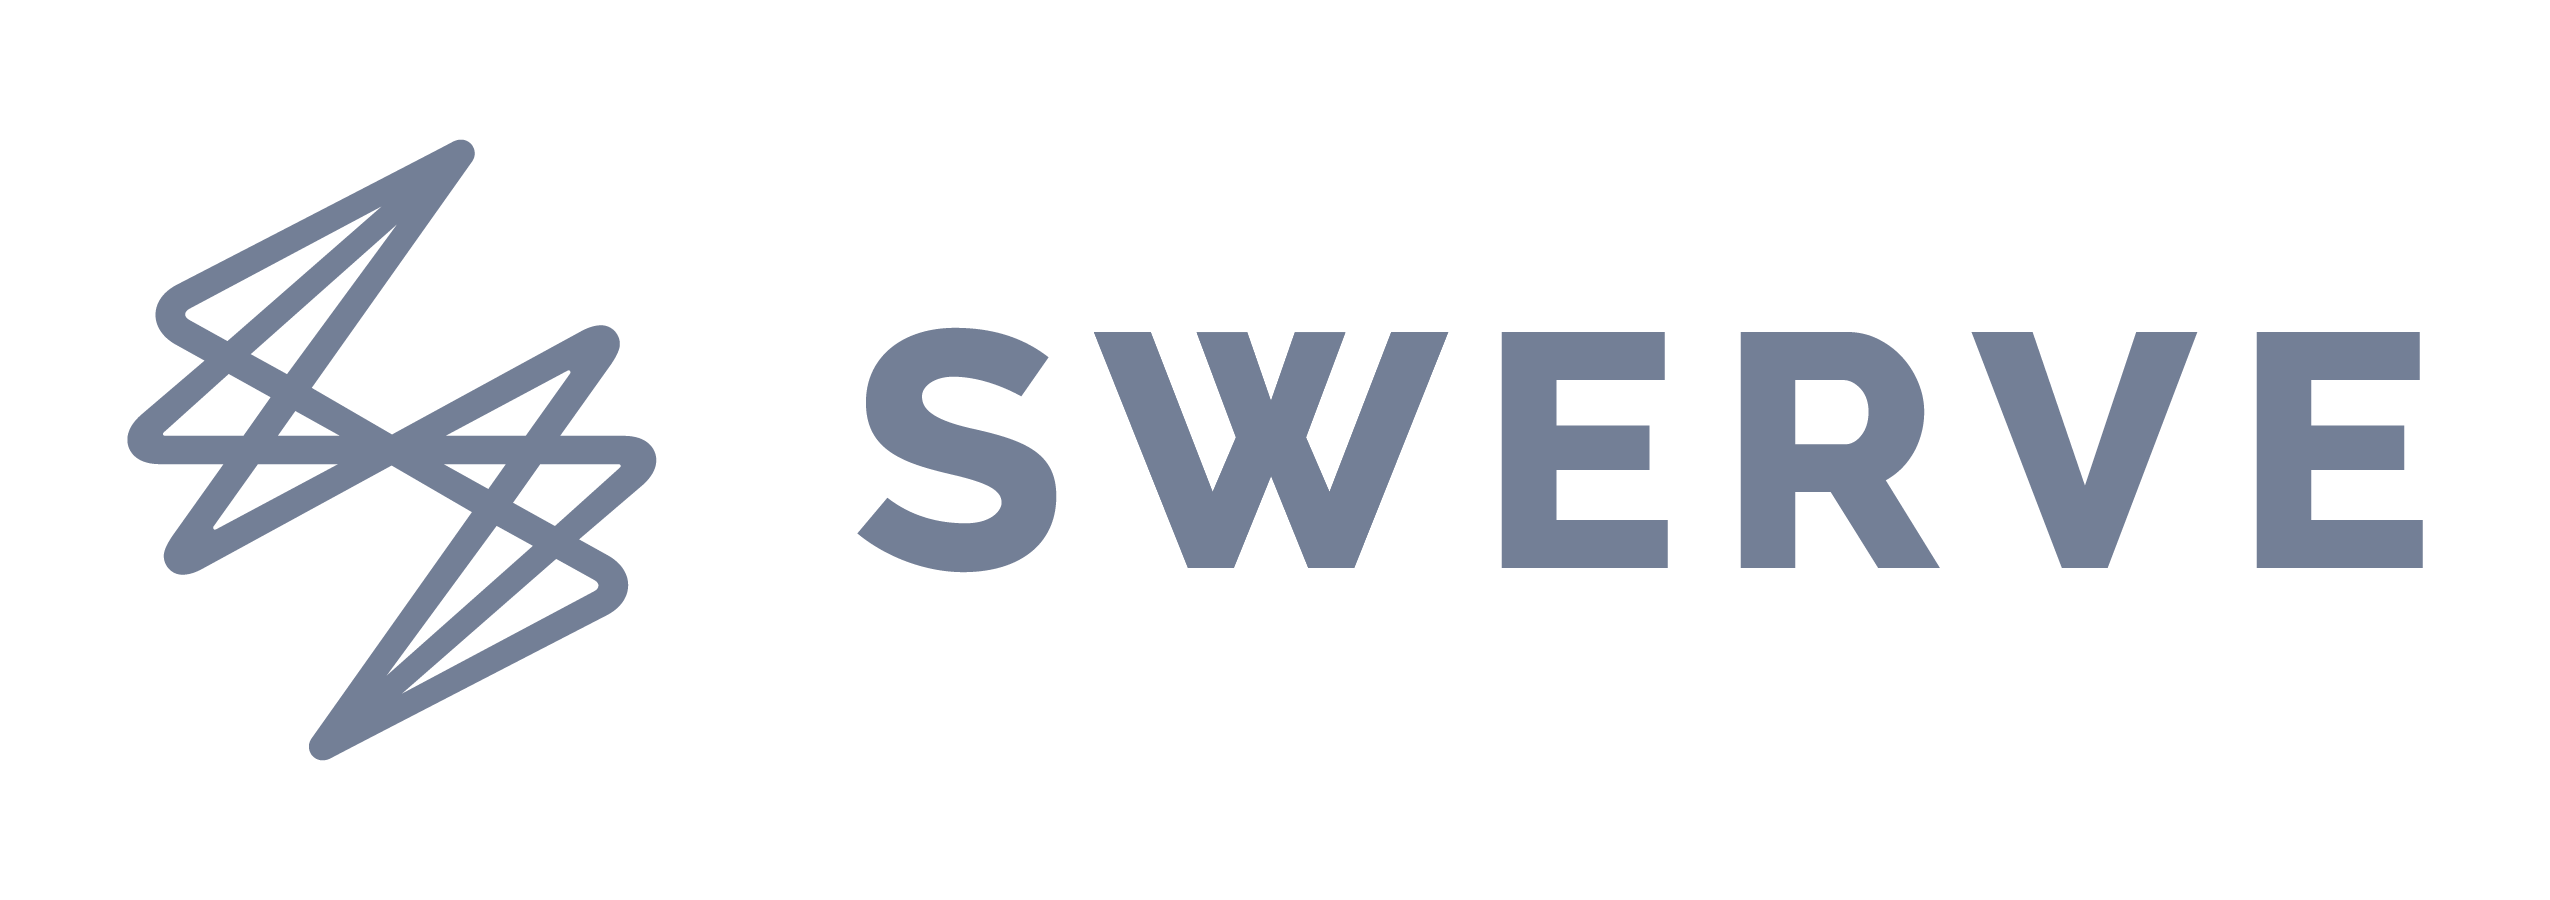 Swerve Logo - SWERVE Fitness